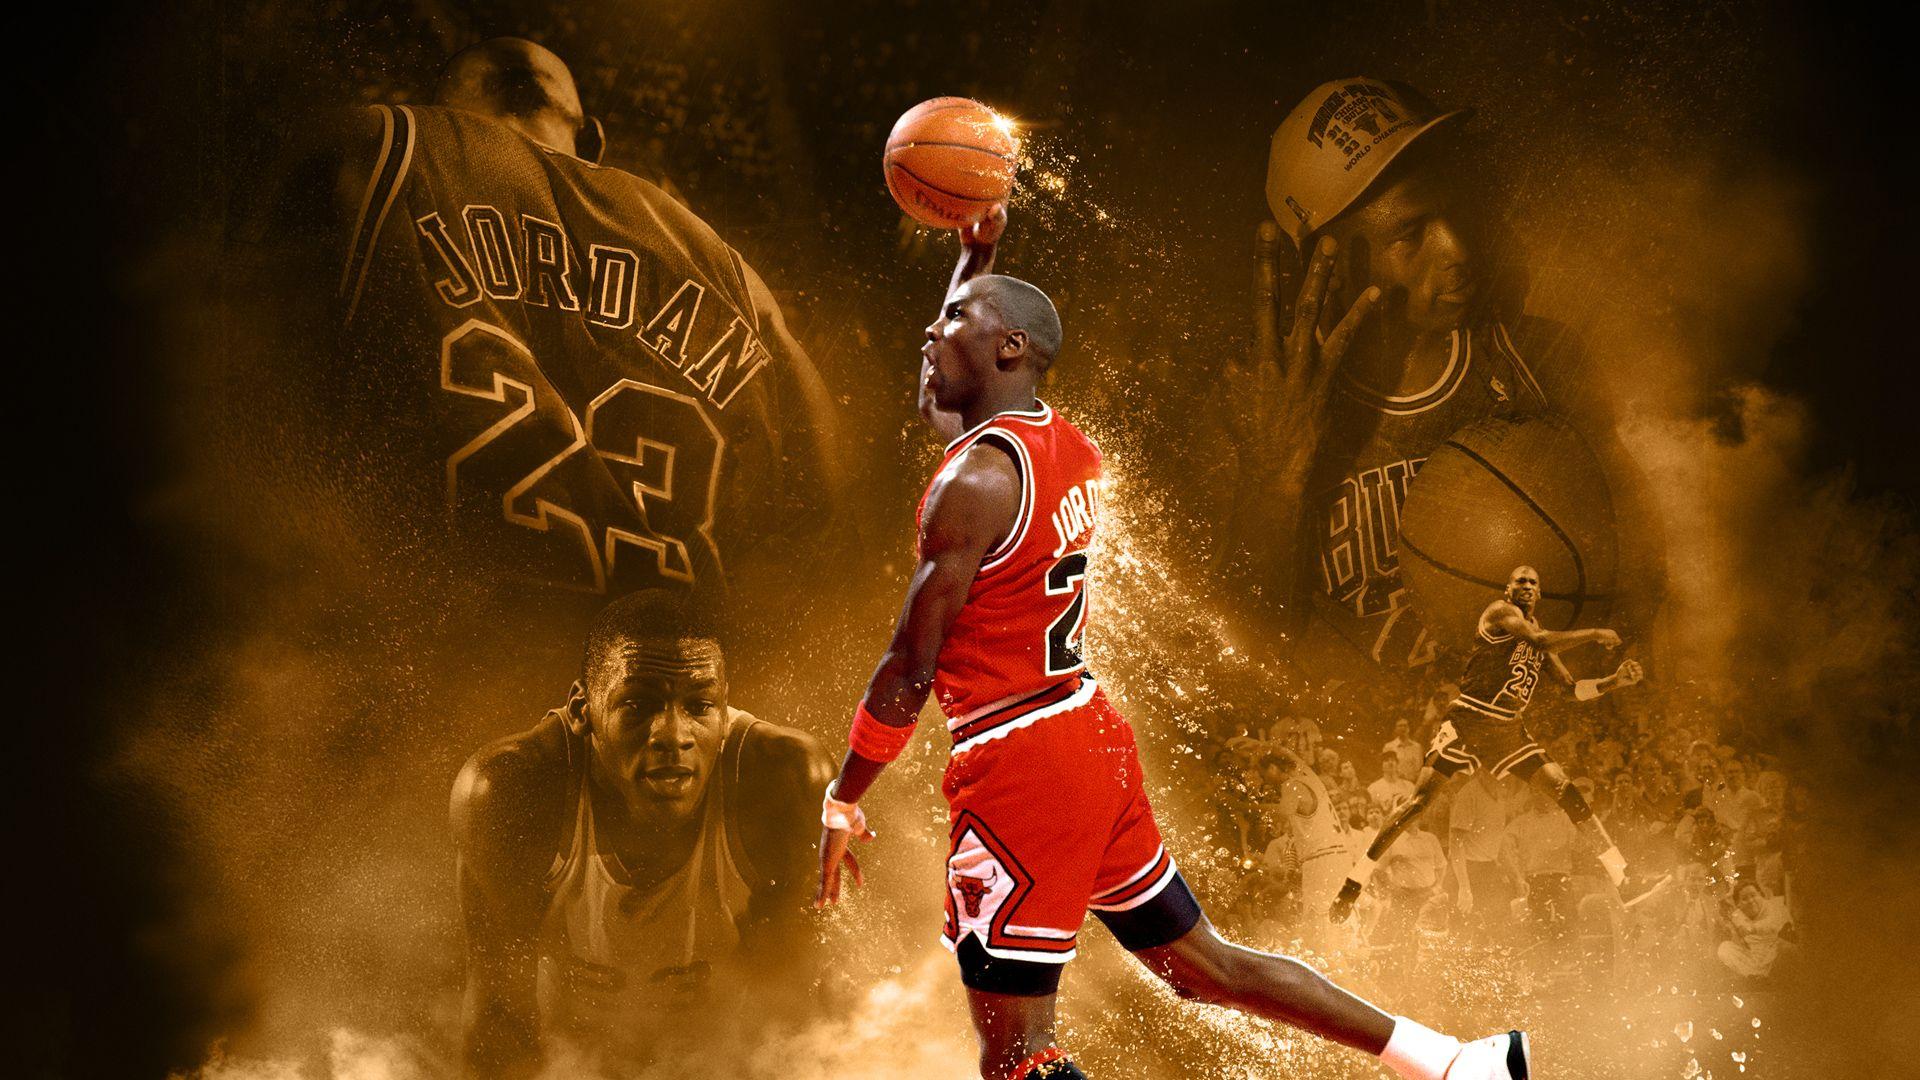 PFTW: Michael Jordan Wallpaper